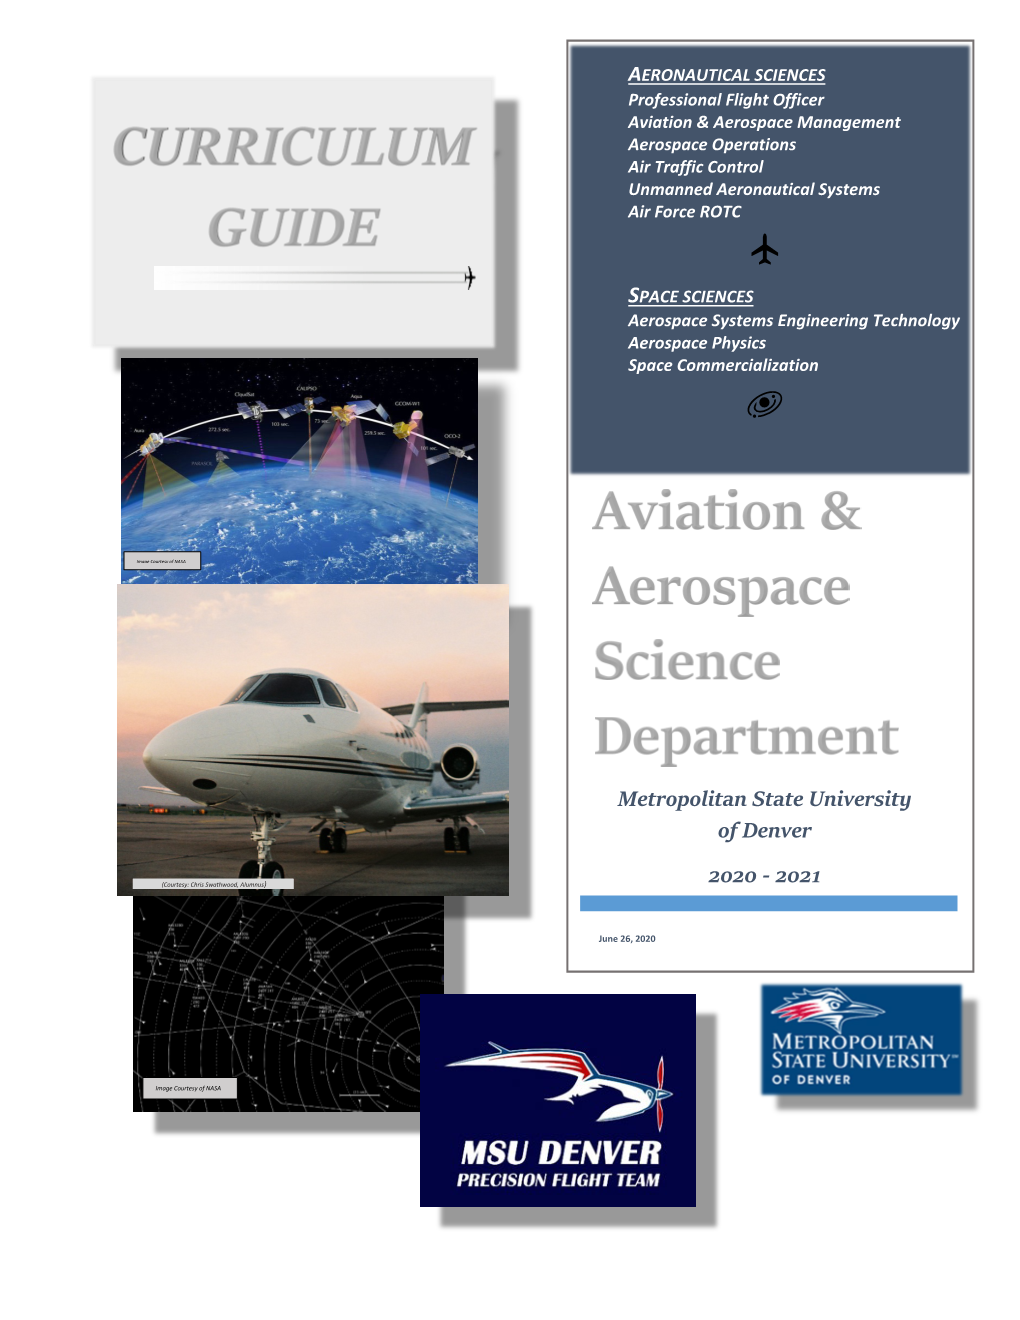 Aviation & Aerospace Science Department